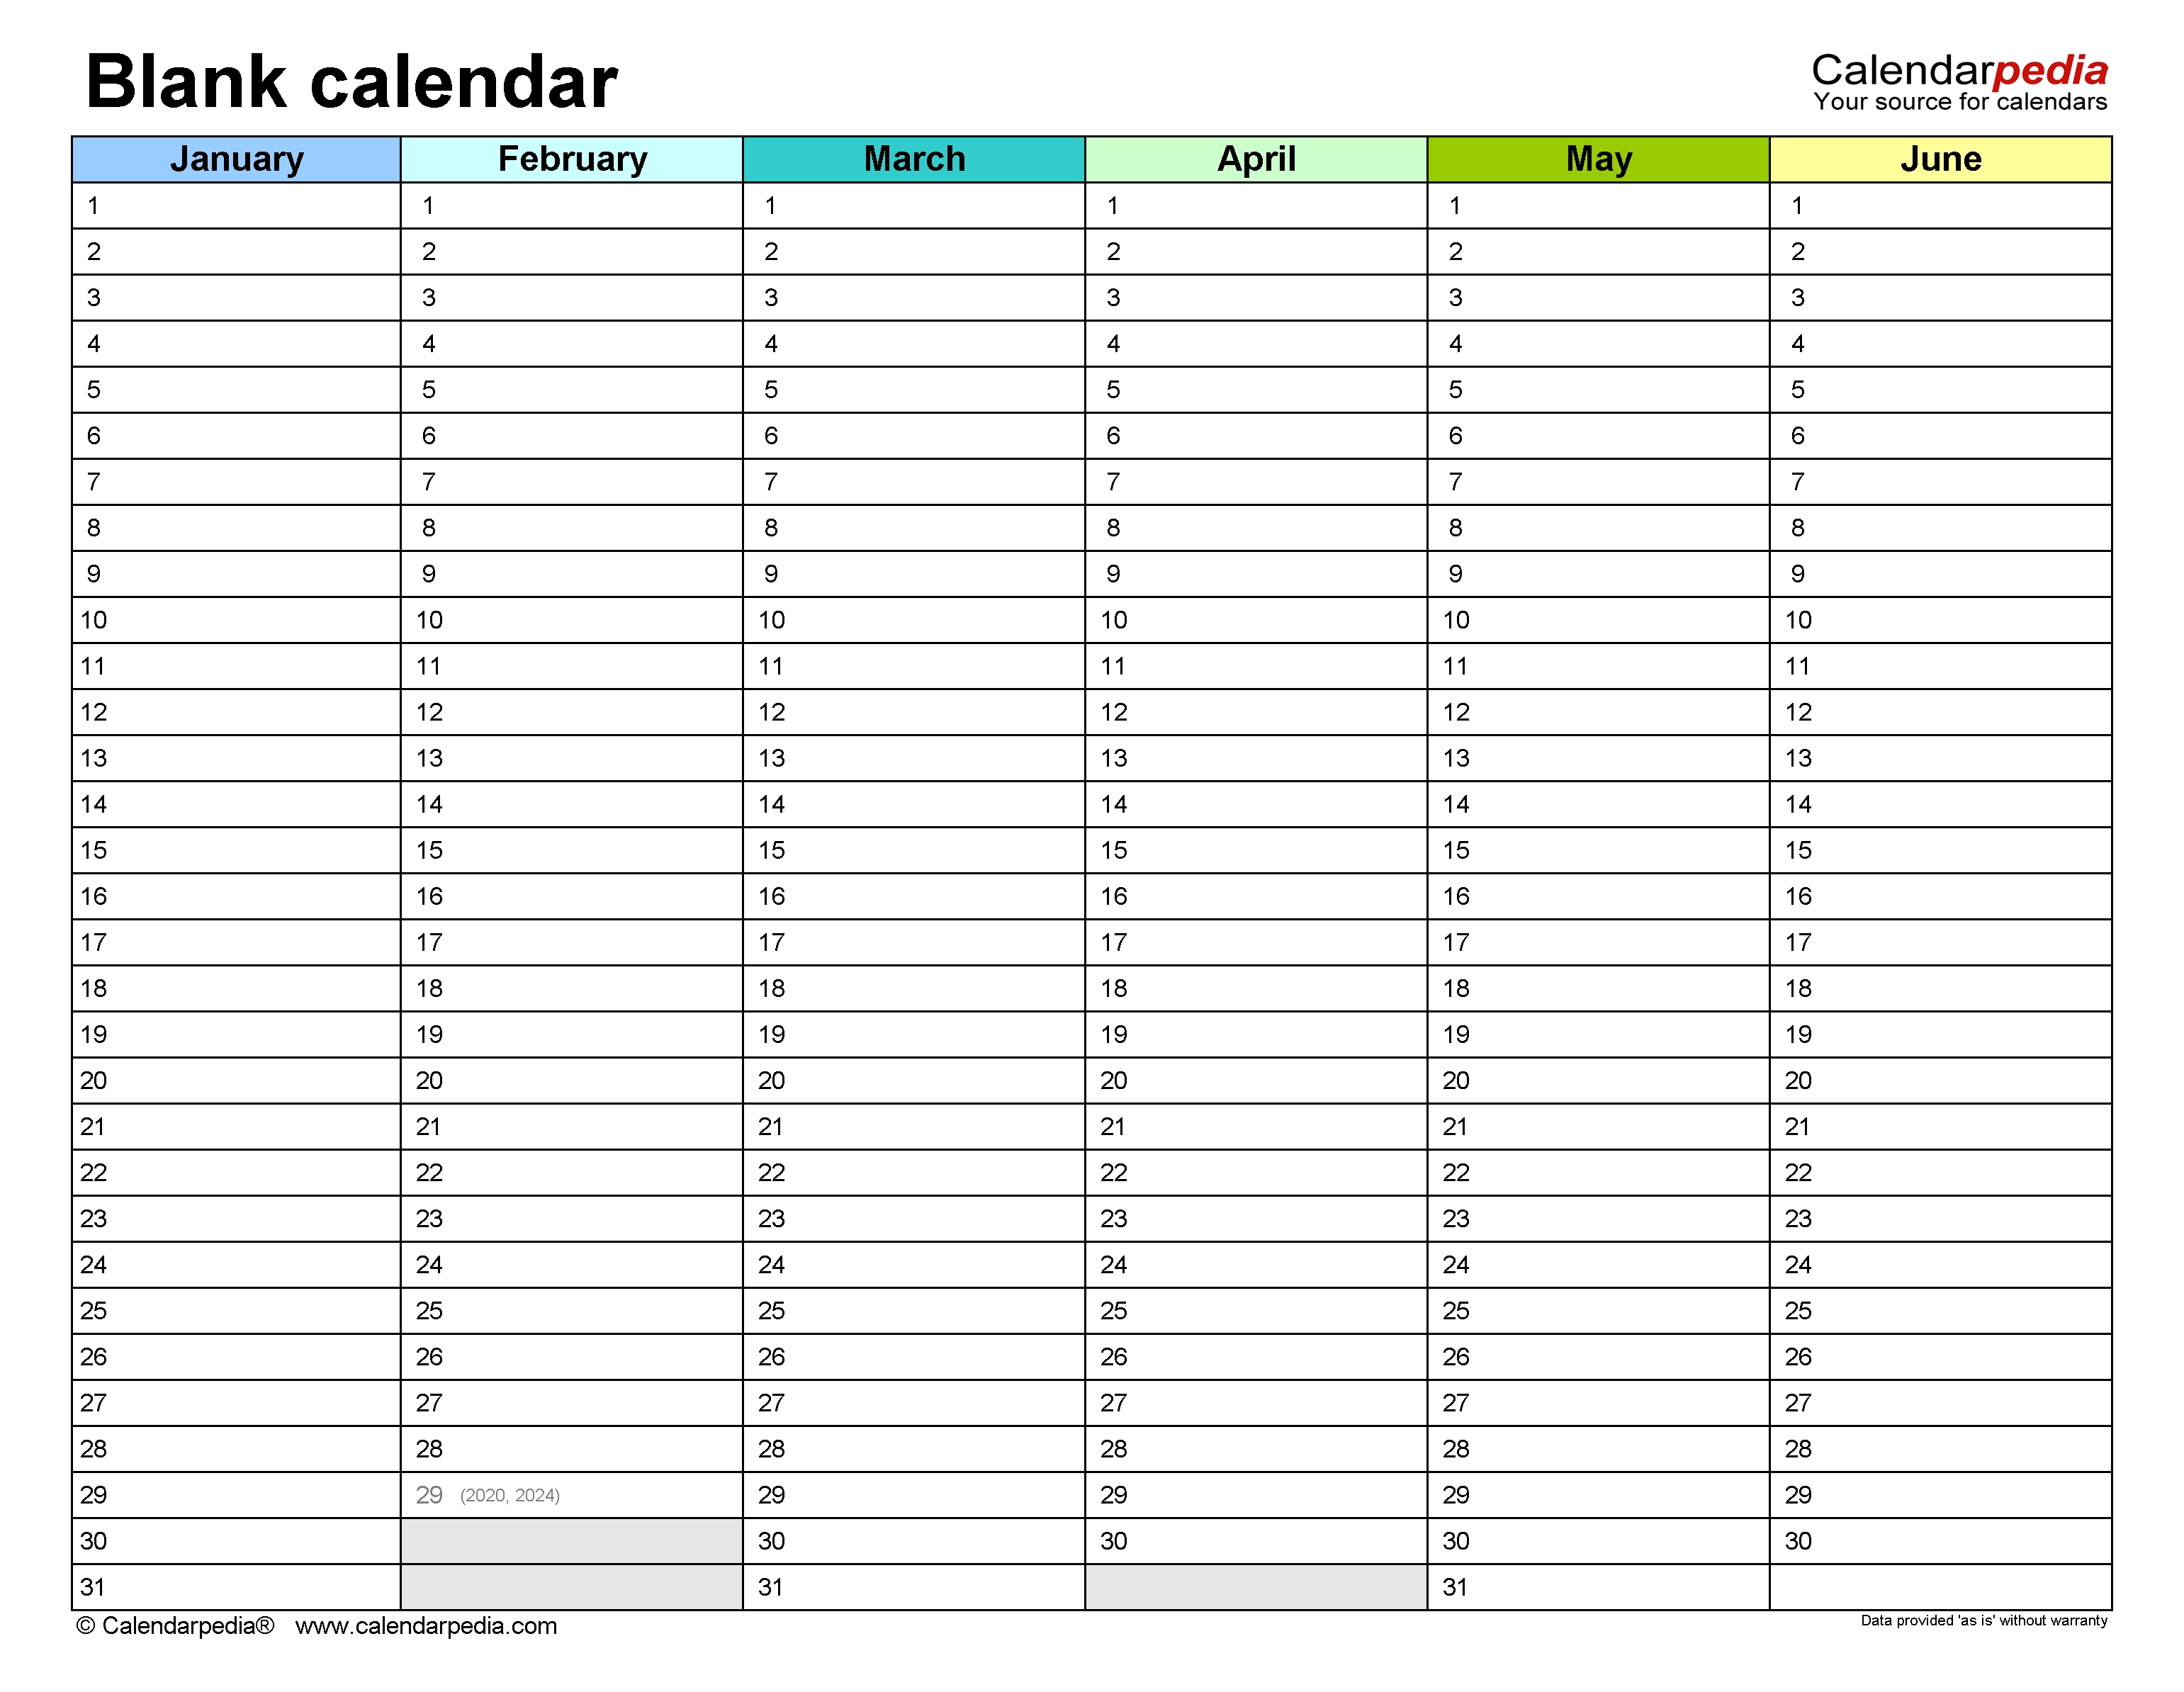 Blank Calendars - Free Printable Microsoft Word Templates Calendar Template Printable Free